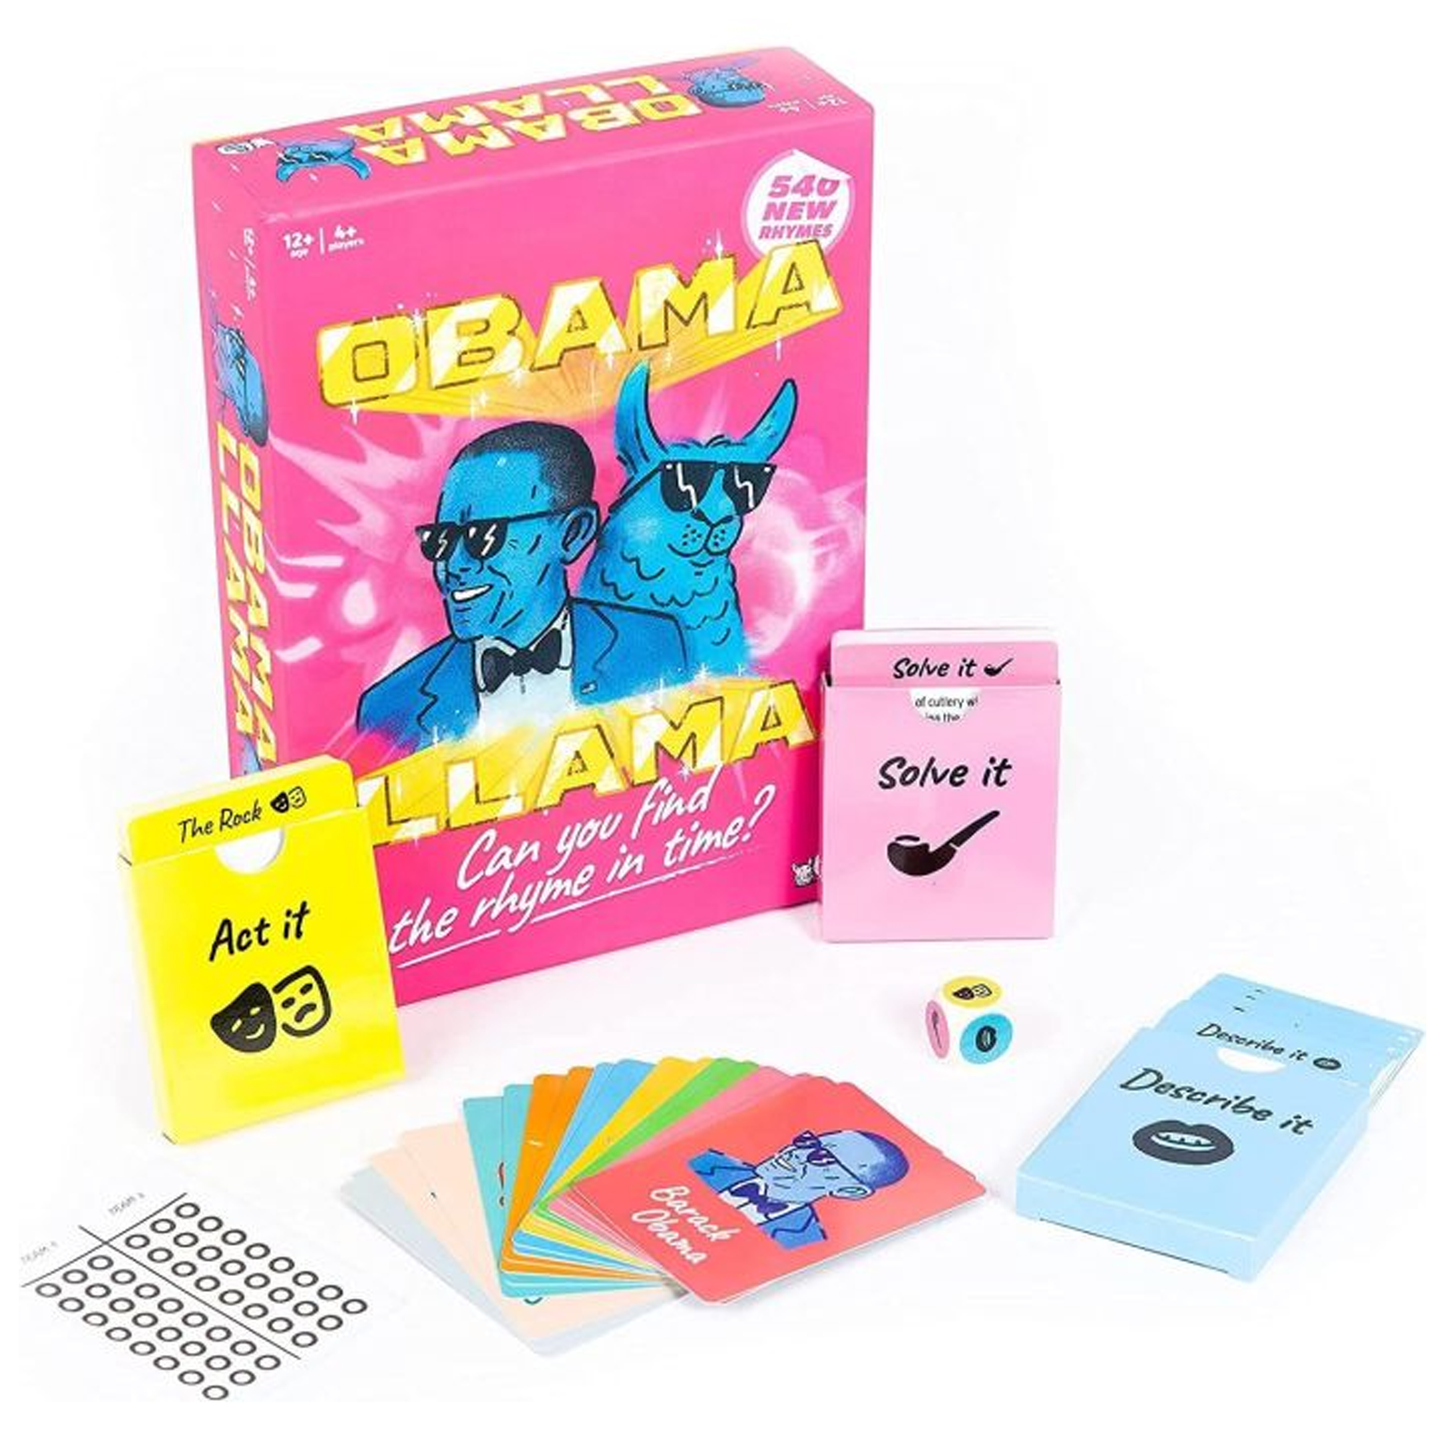 Obama Llama Party Board Game Box and Contents | Happy Piranha